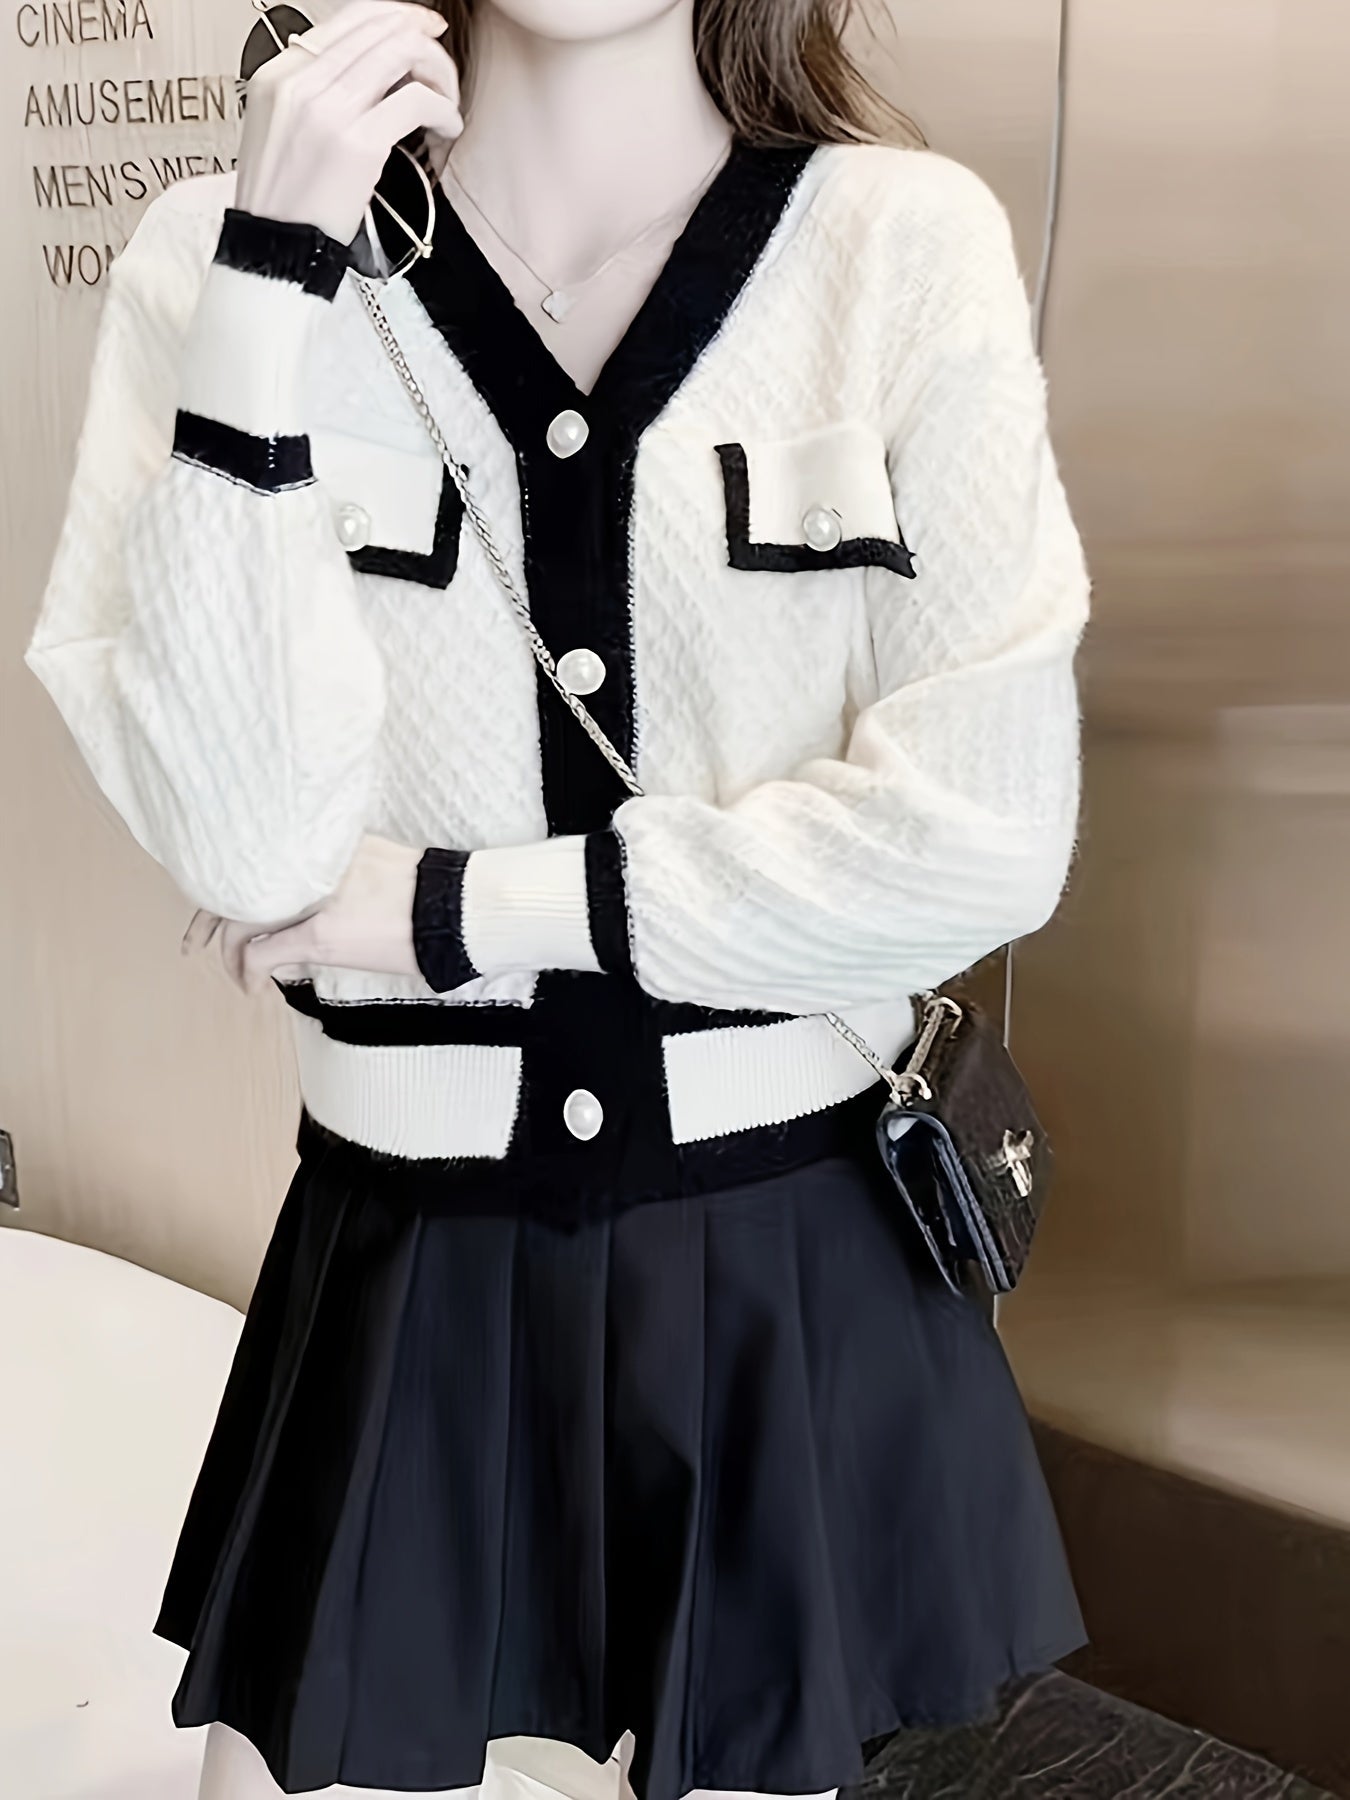 Antmvs Contrast Trim Single Breasted Cardigan, Elegant Long Sleeve Cardigan For Spring & Fall, Women's Clothing